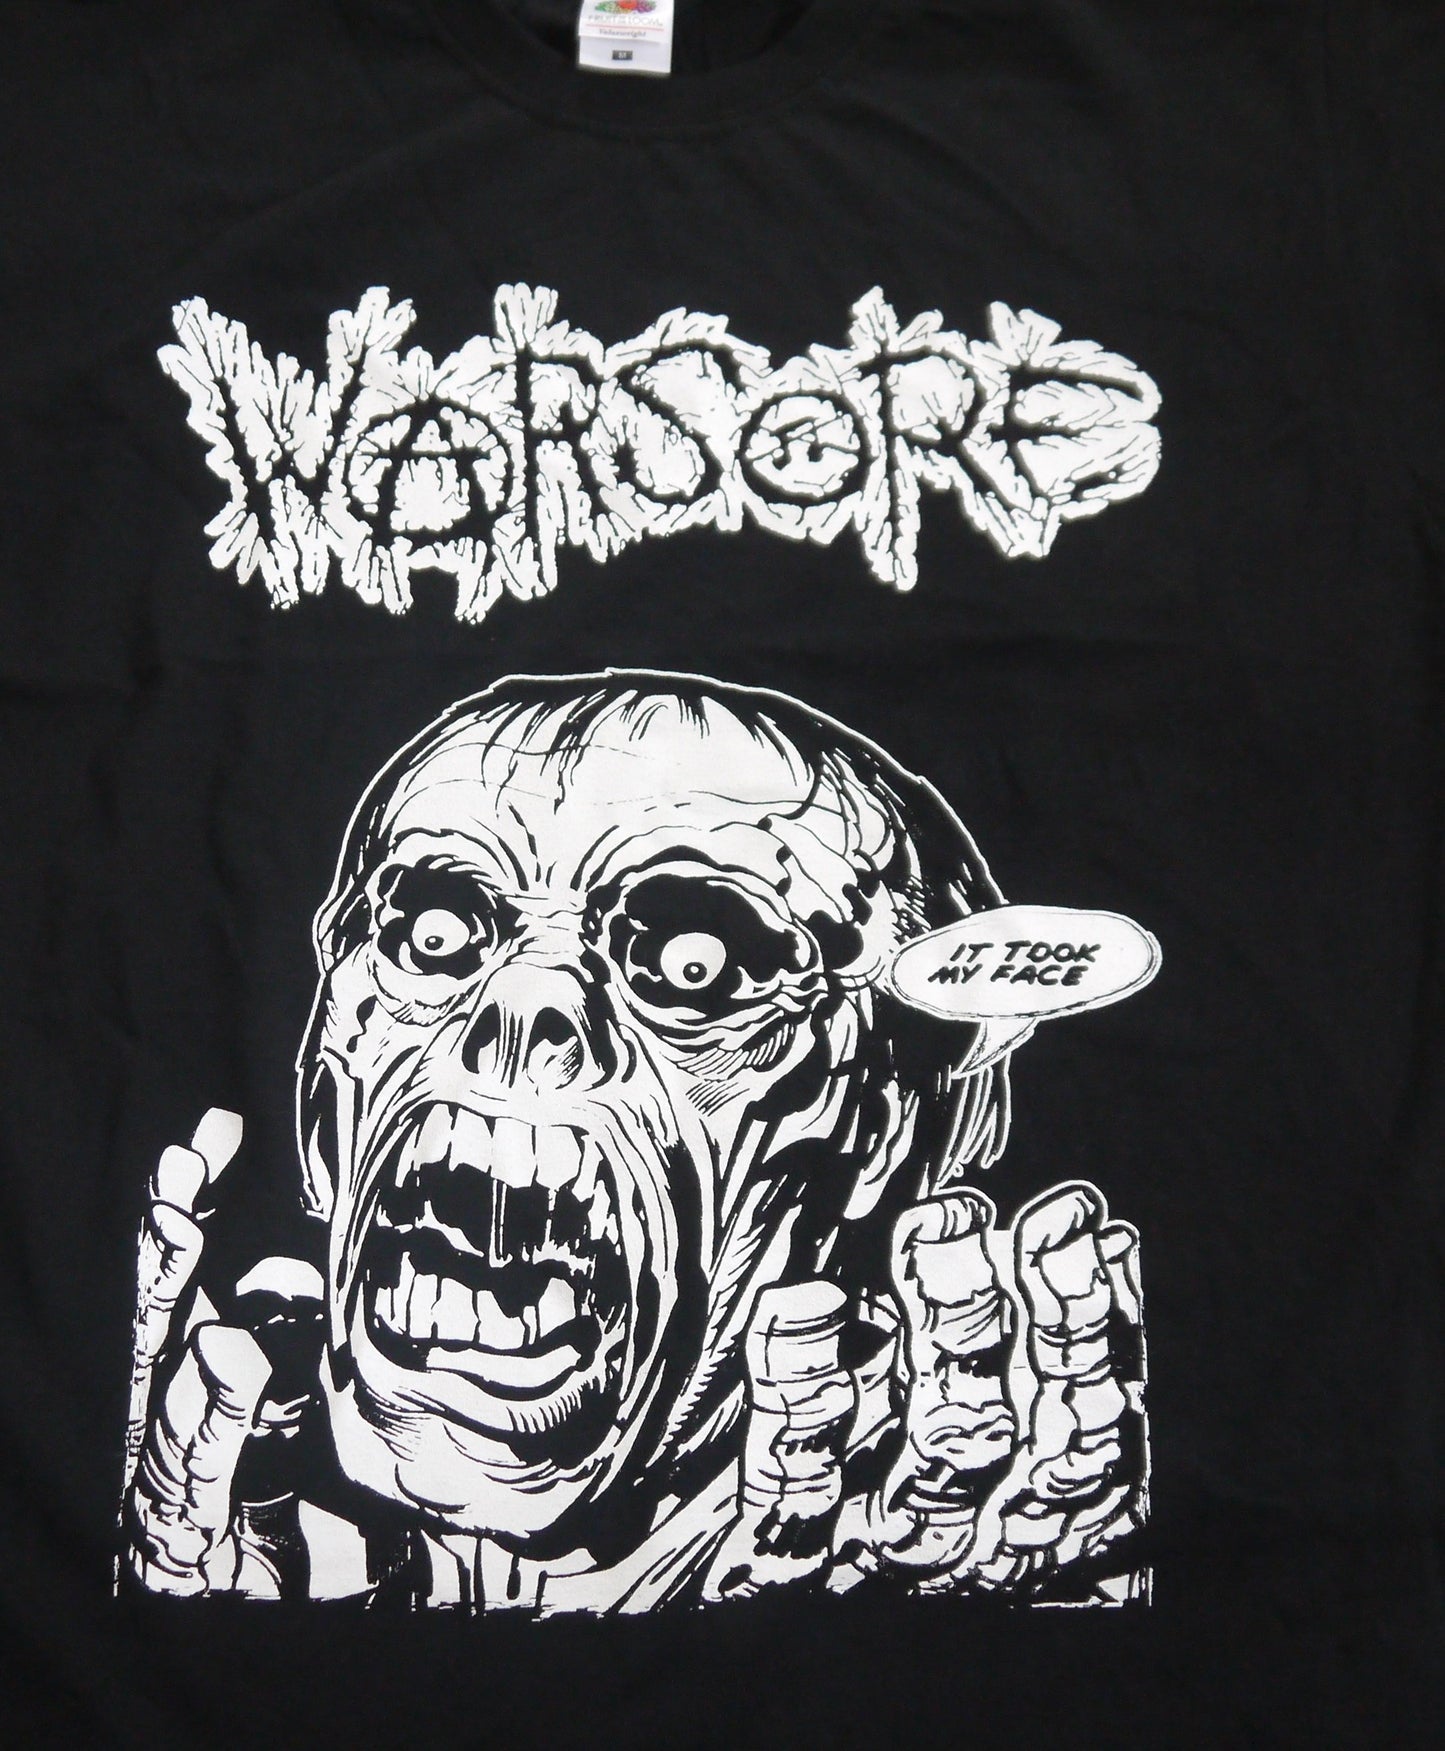 Warsore - It Took My Face - T-shirt